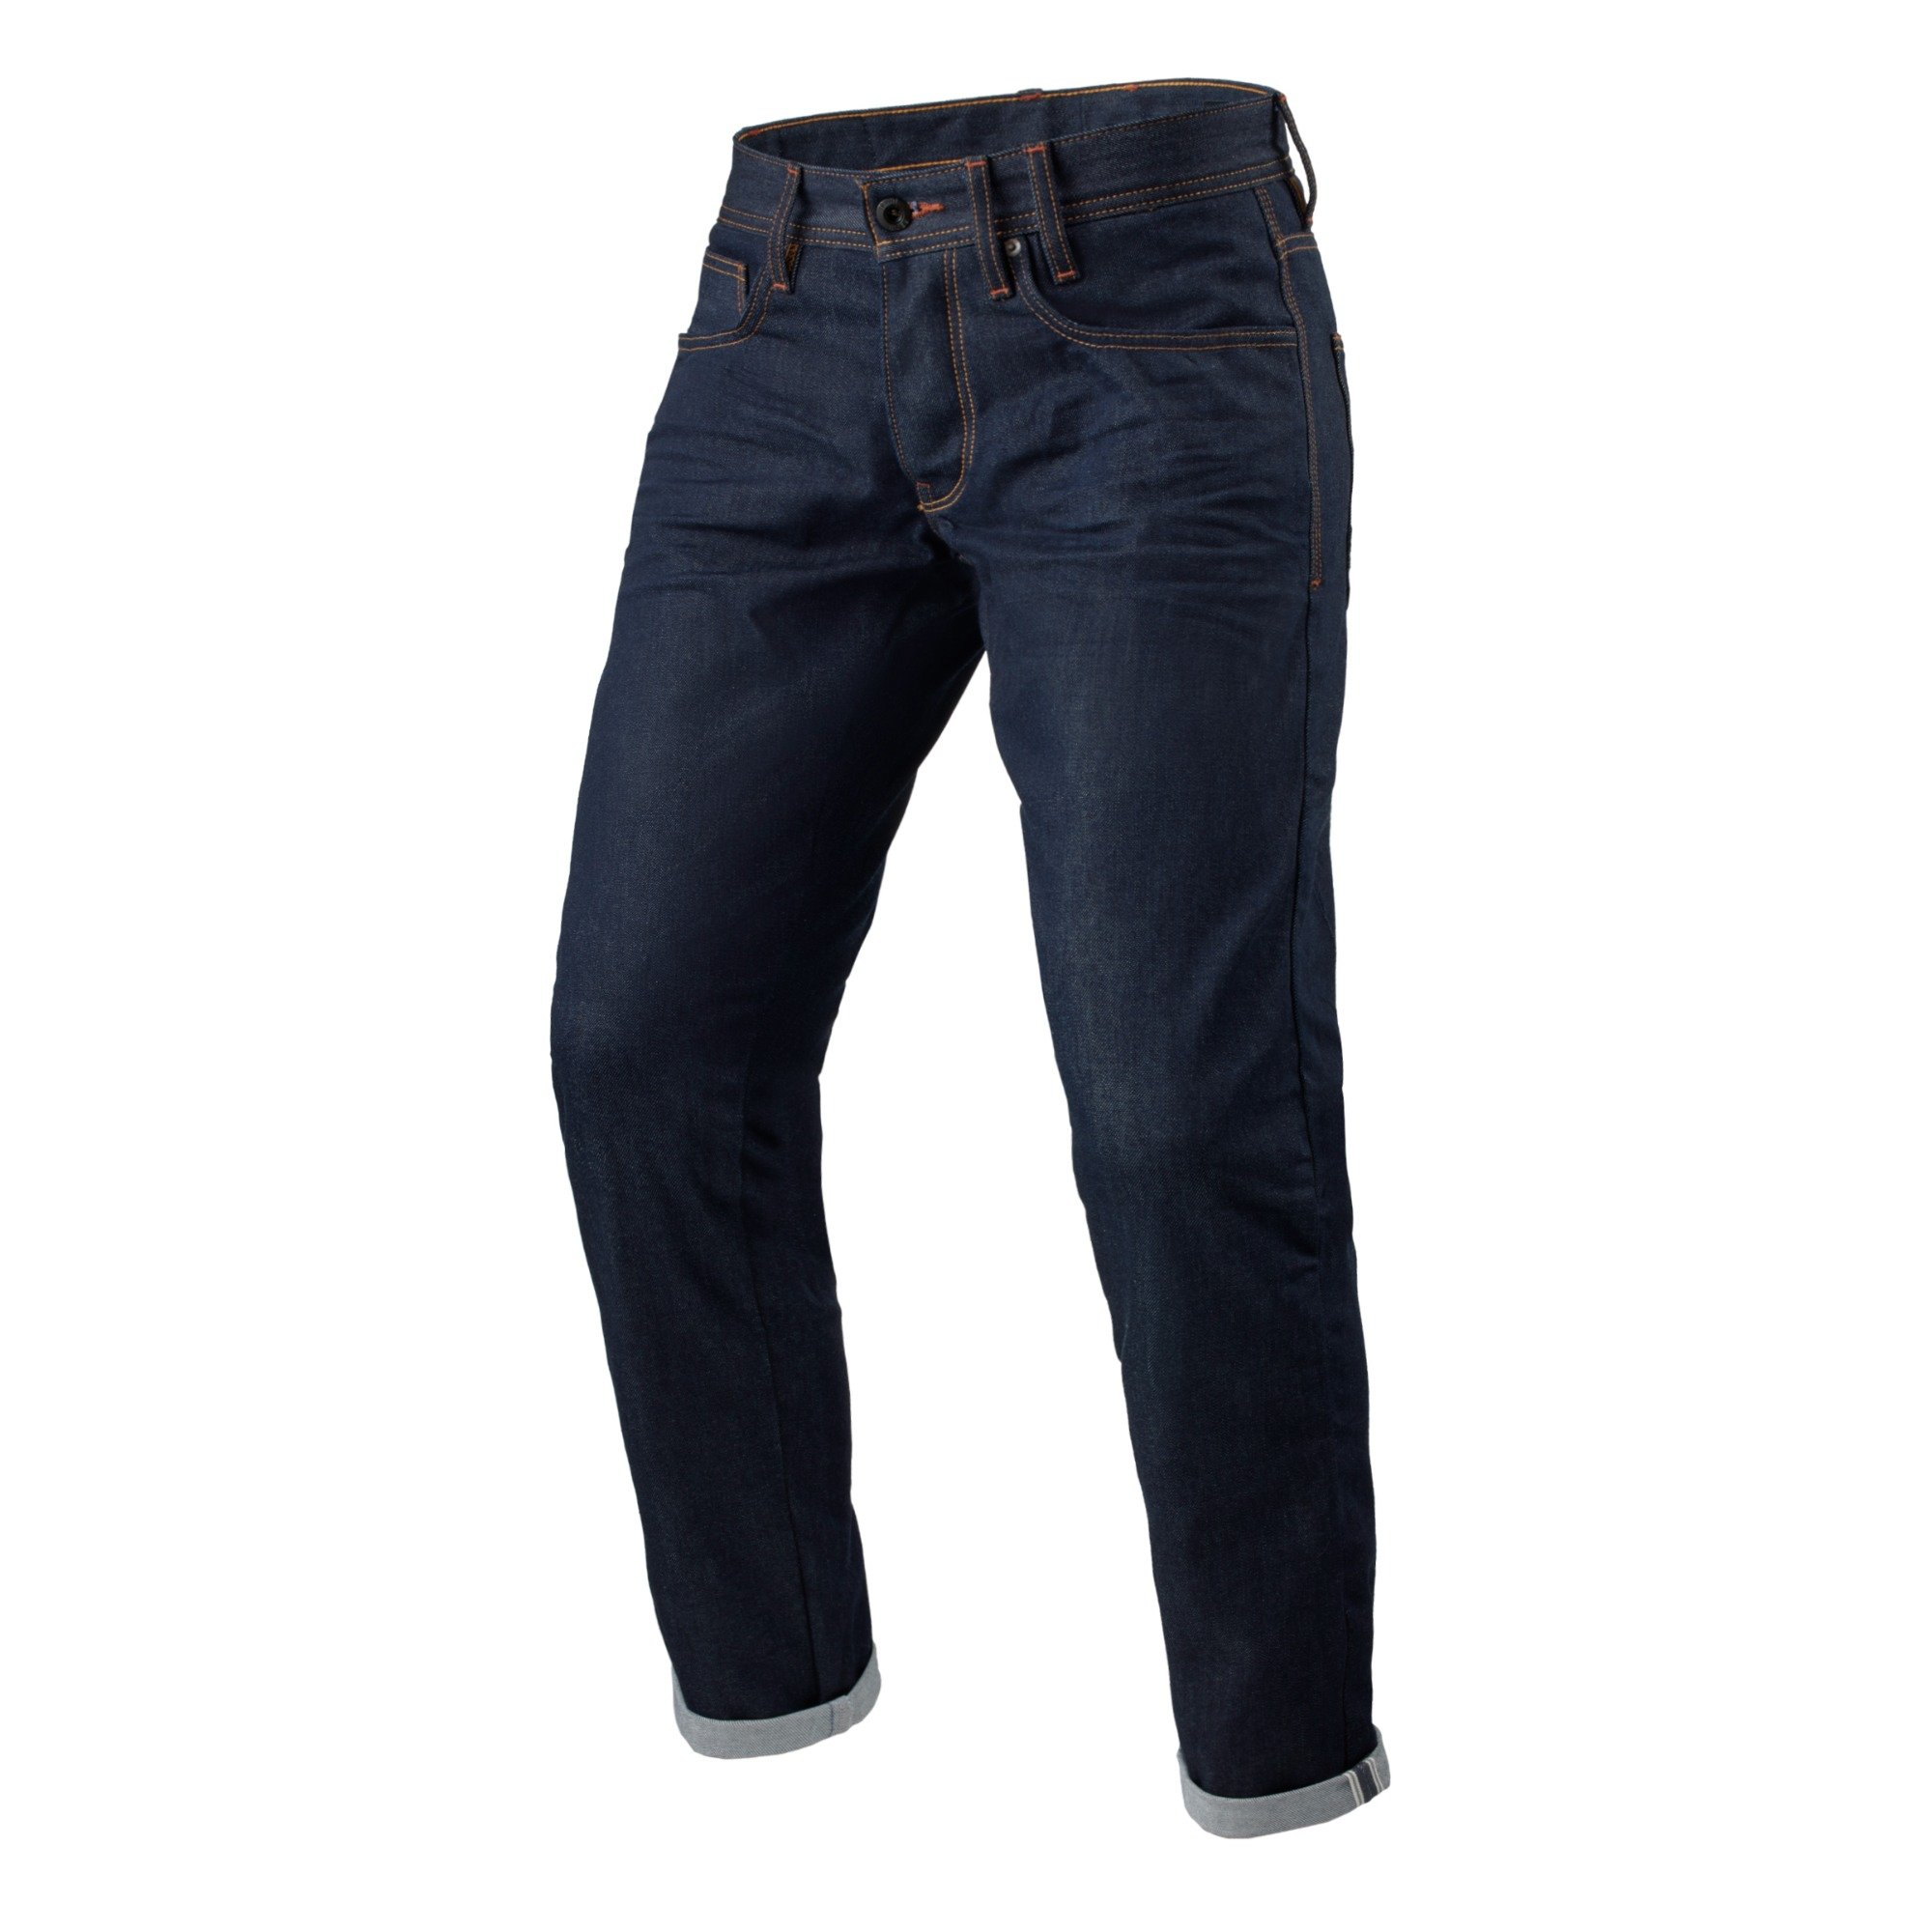 Image of REV'IT! Jeans Lewis Selvedge TF Dark Blue L32 Motorcycle Pants Size L32/W36 EN